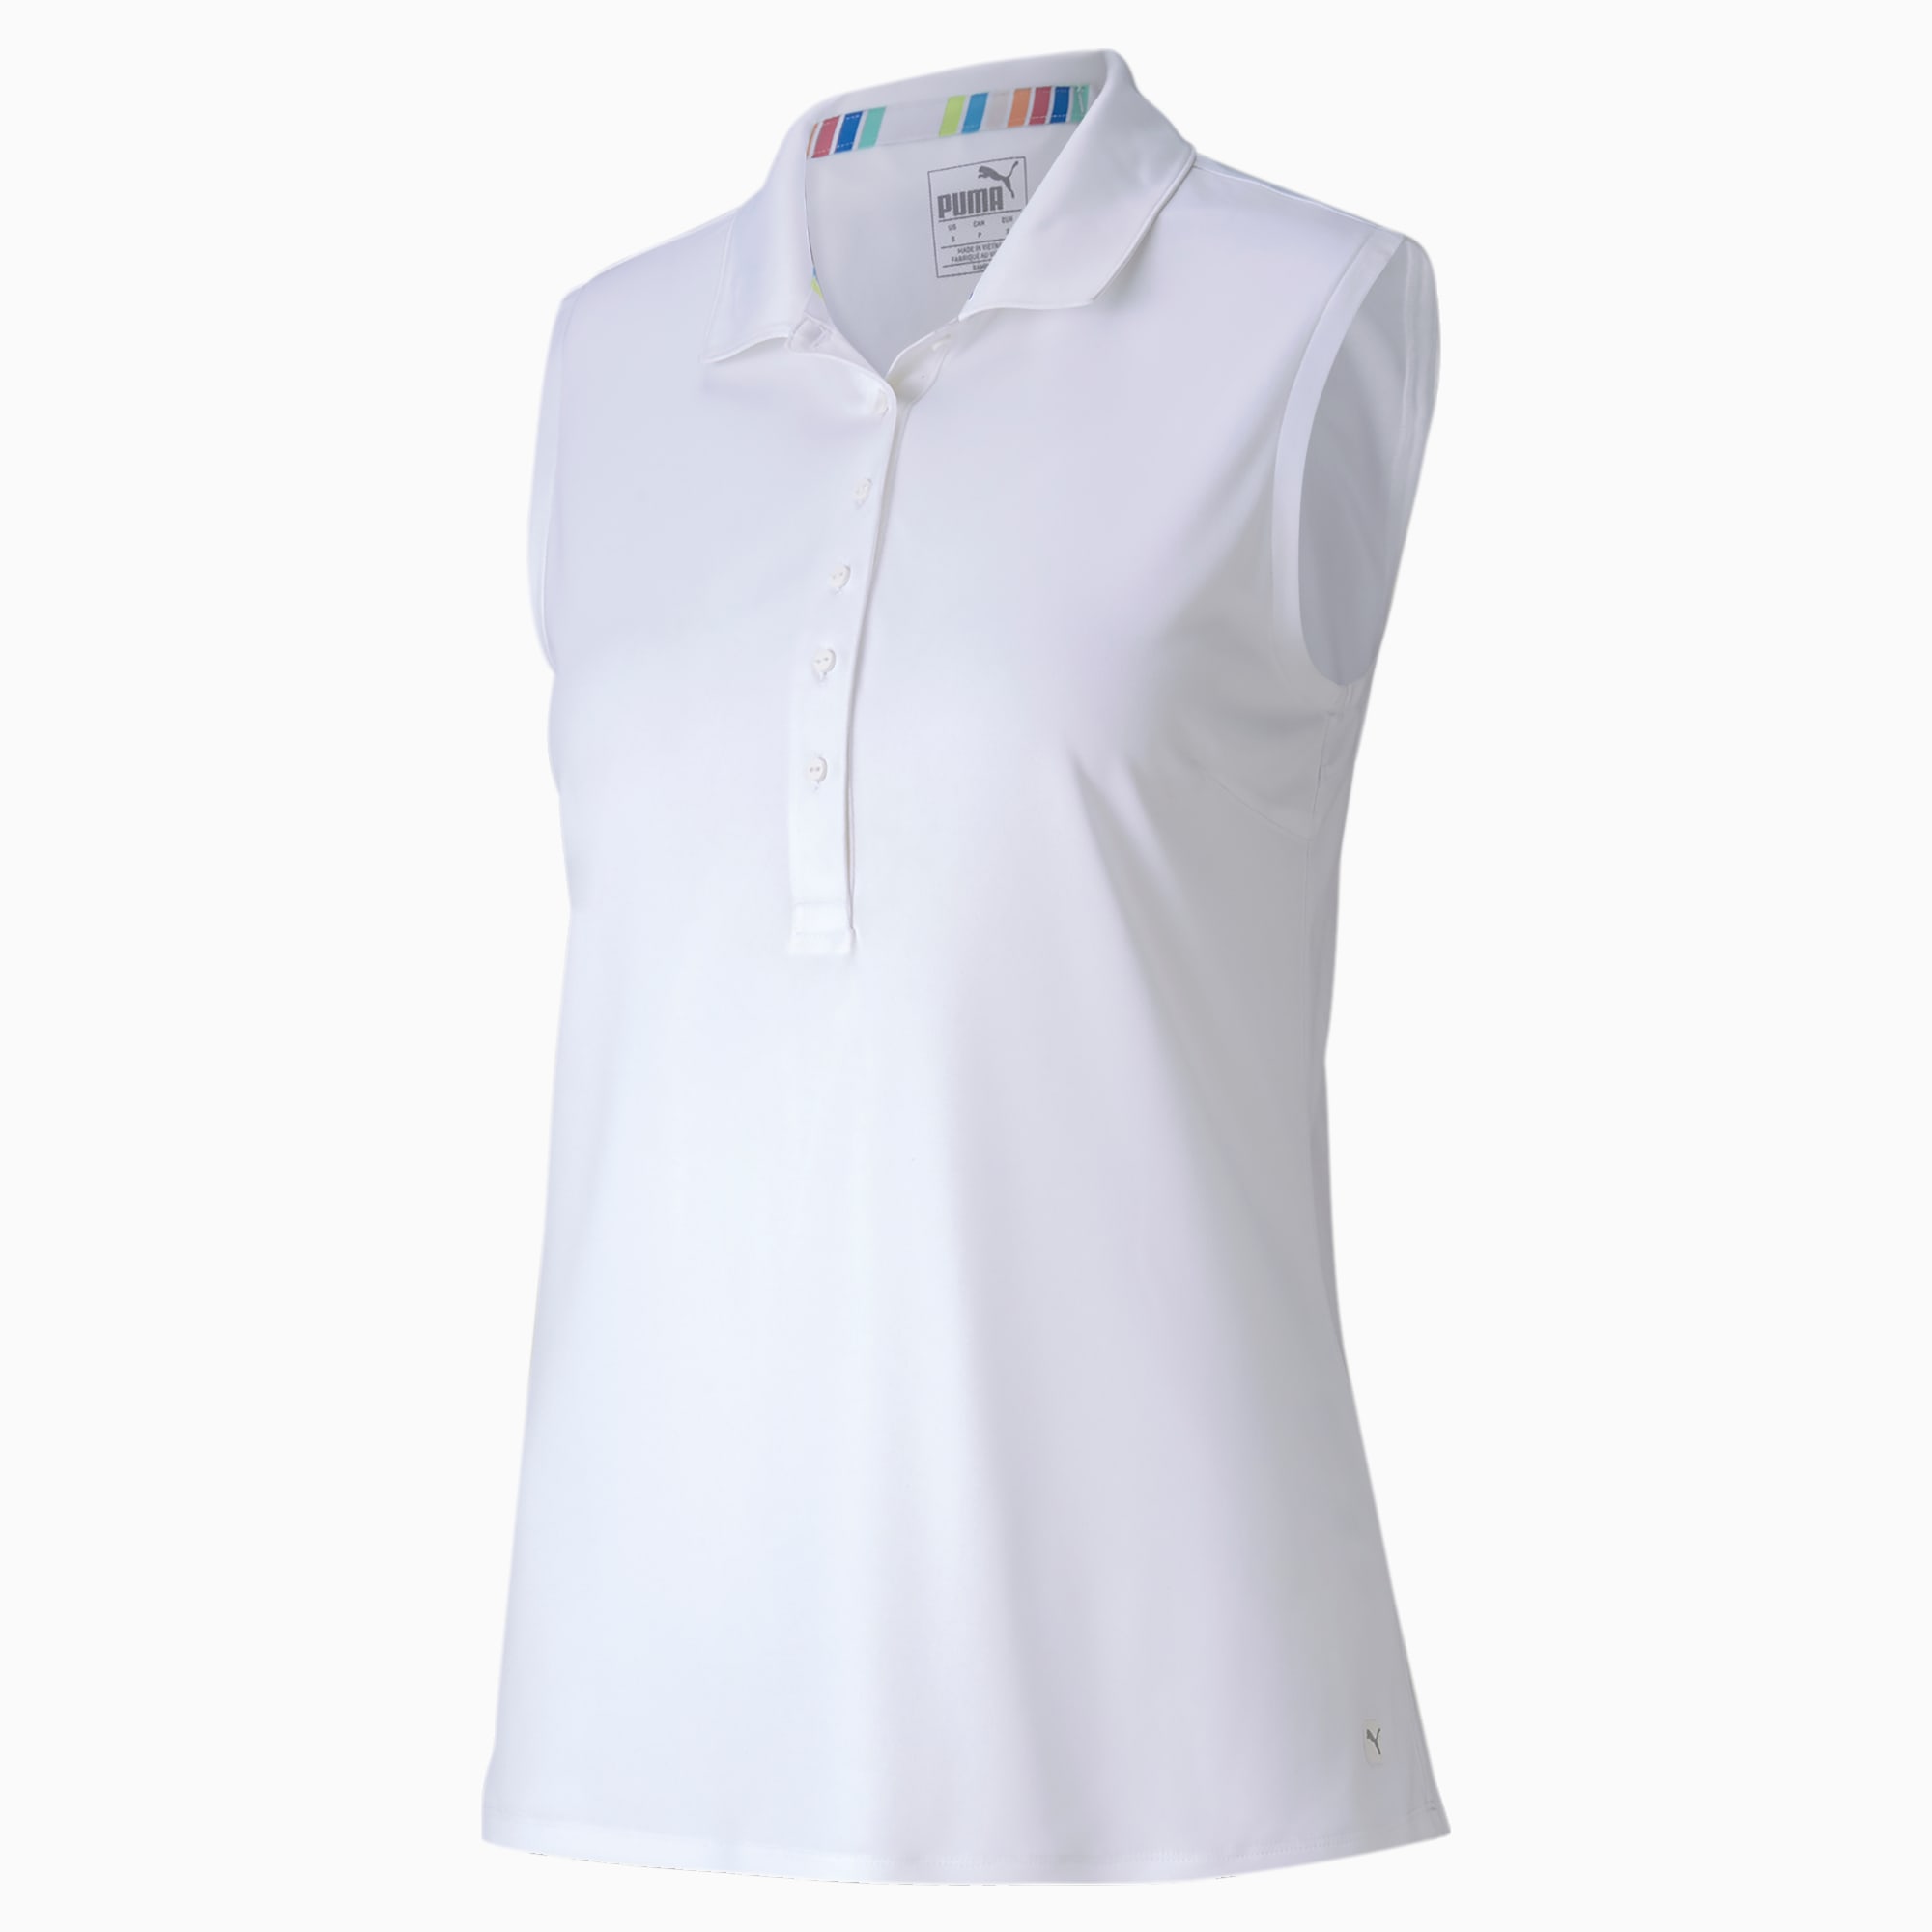 women's sleeveless golf polo shirts